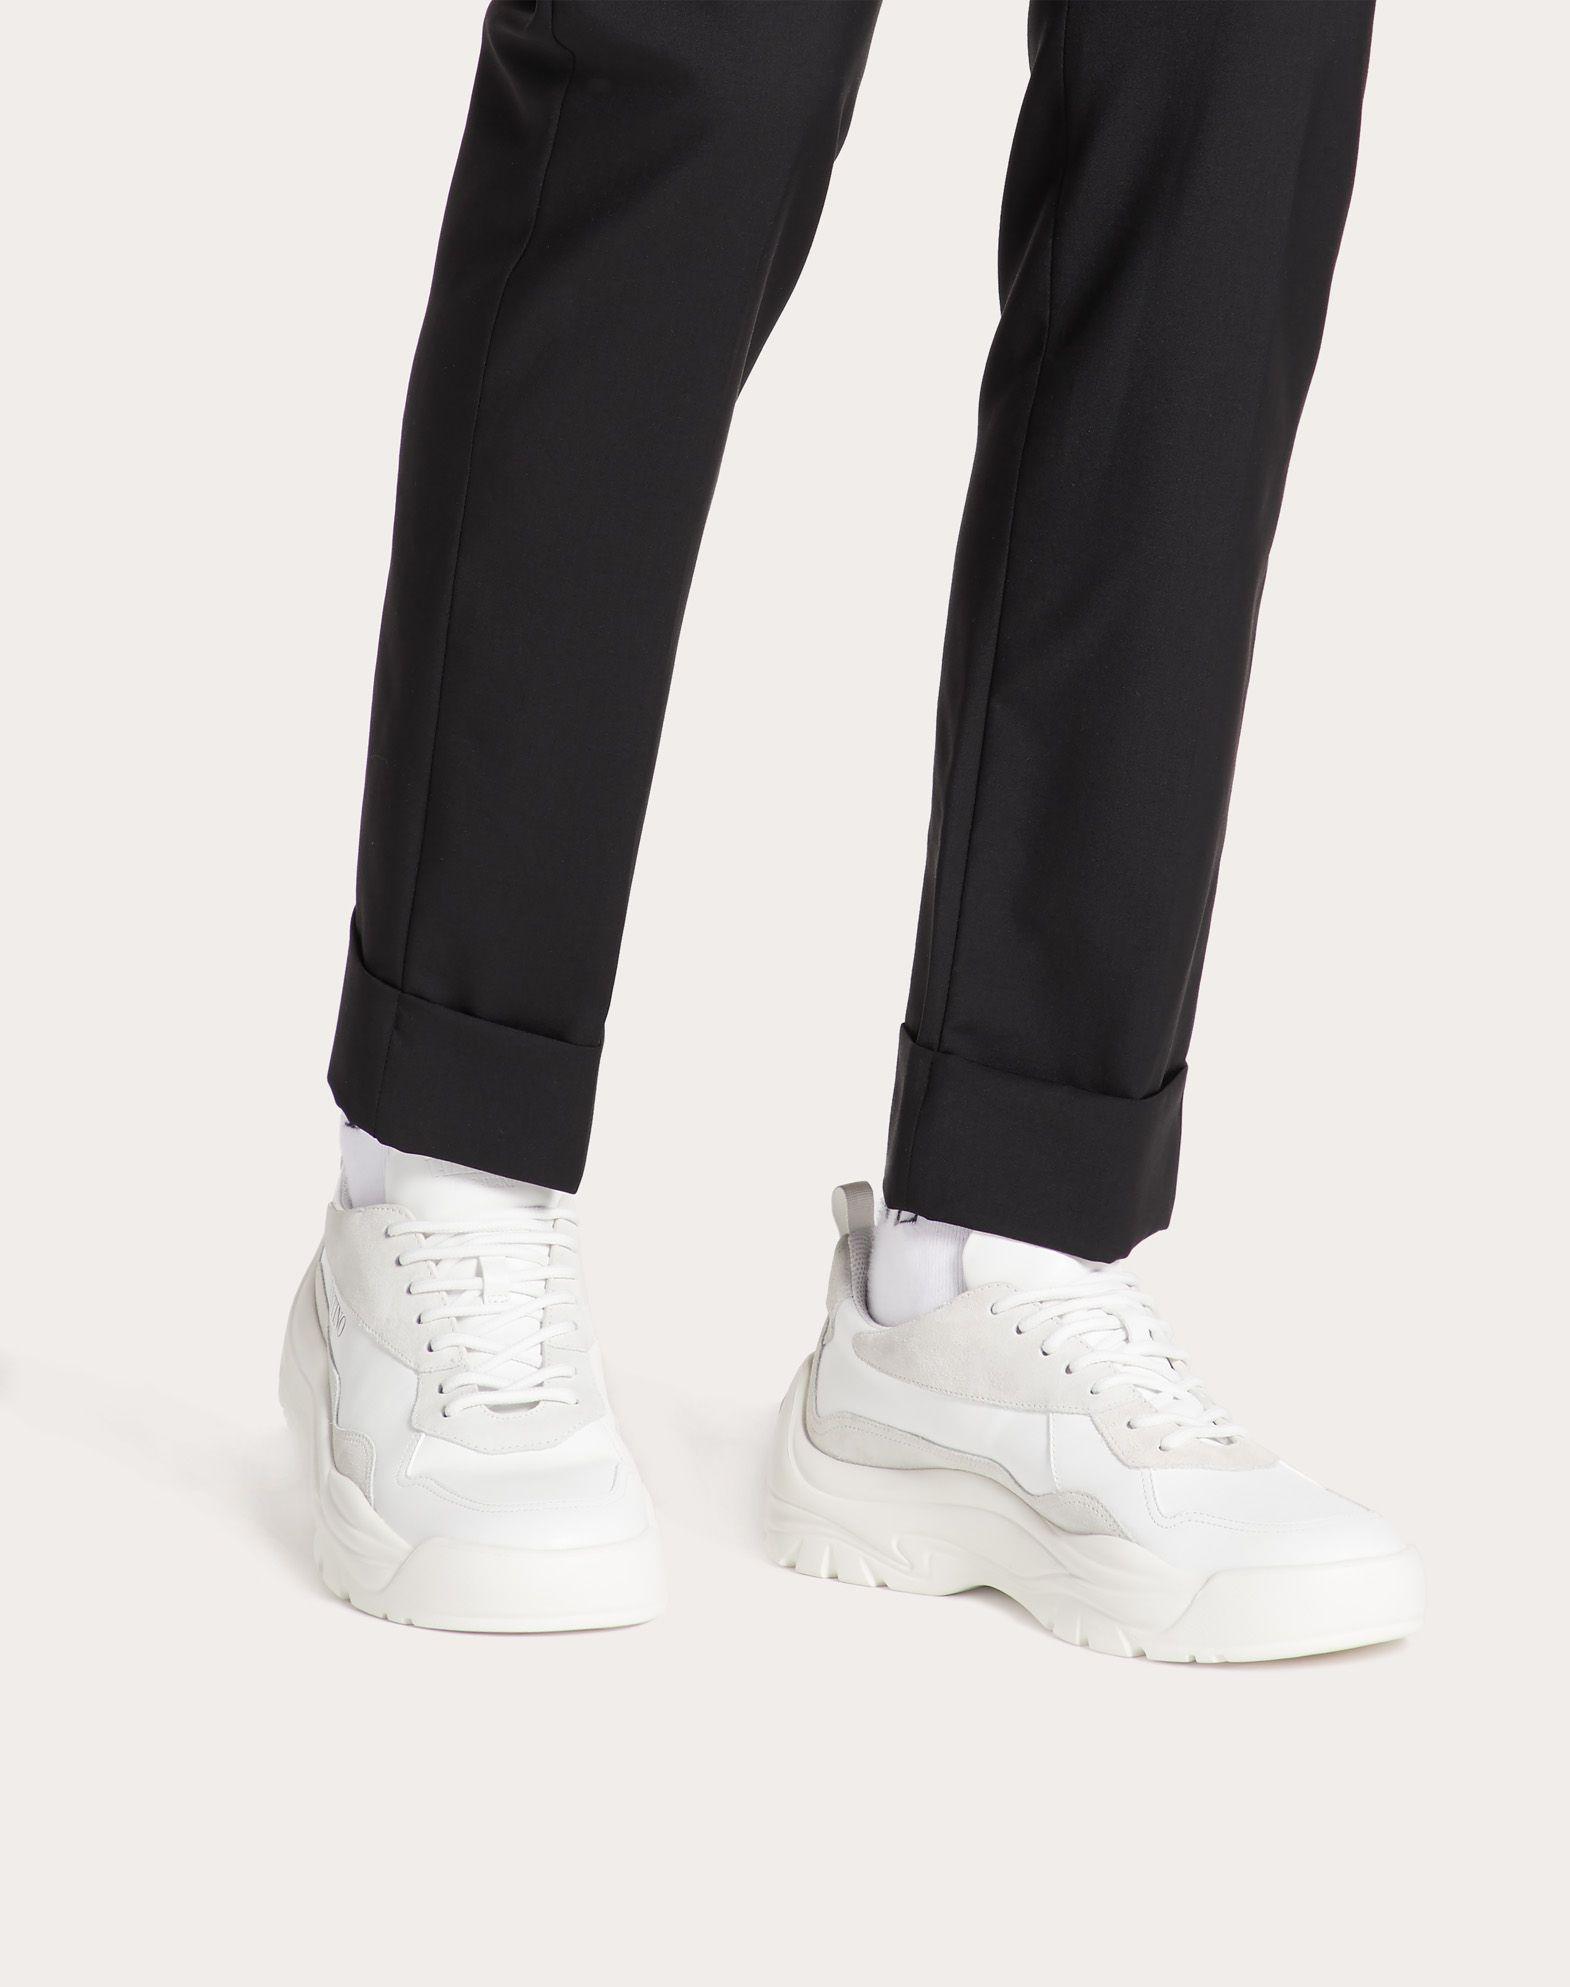 Valentino Garavani Leather Valentino Garavani Gumboy Sneakers in White for  Men - Save 50% - Lyst